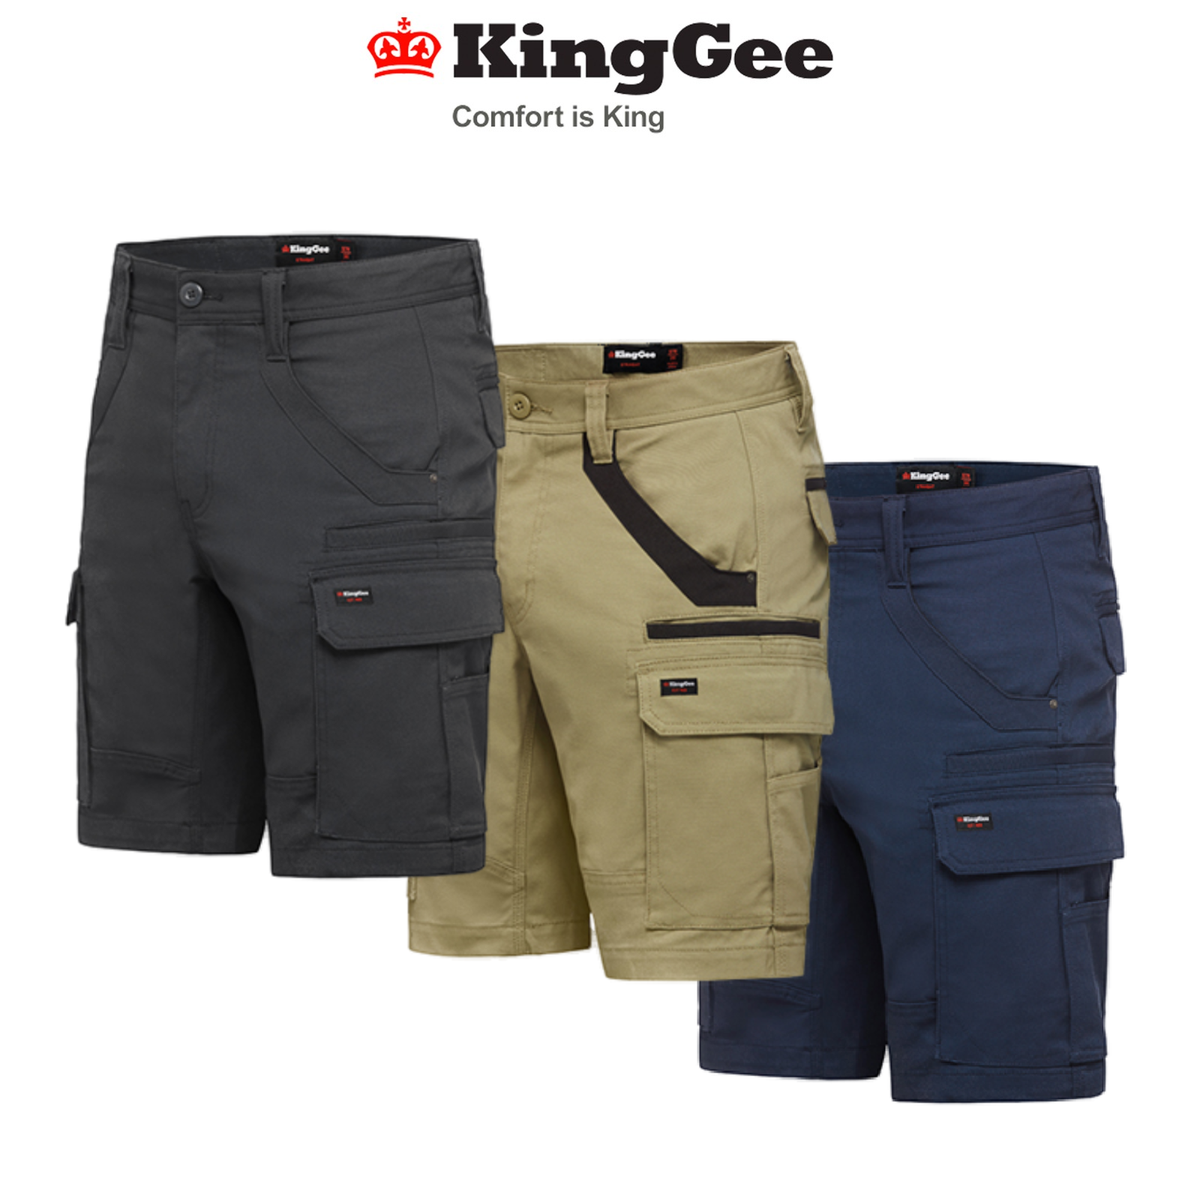 KingGee Mens Tradies Stretch Cargo Shorts Tough Work Safety Utility Comfy K69870